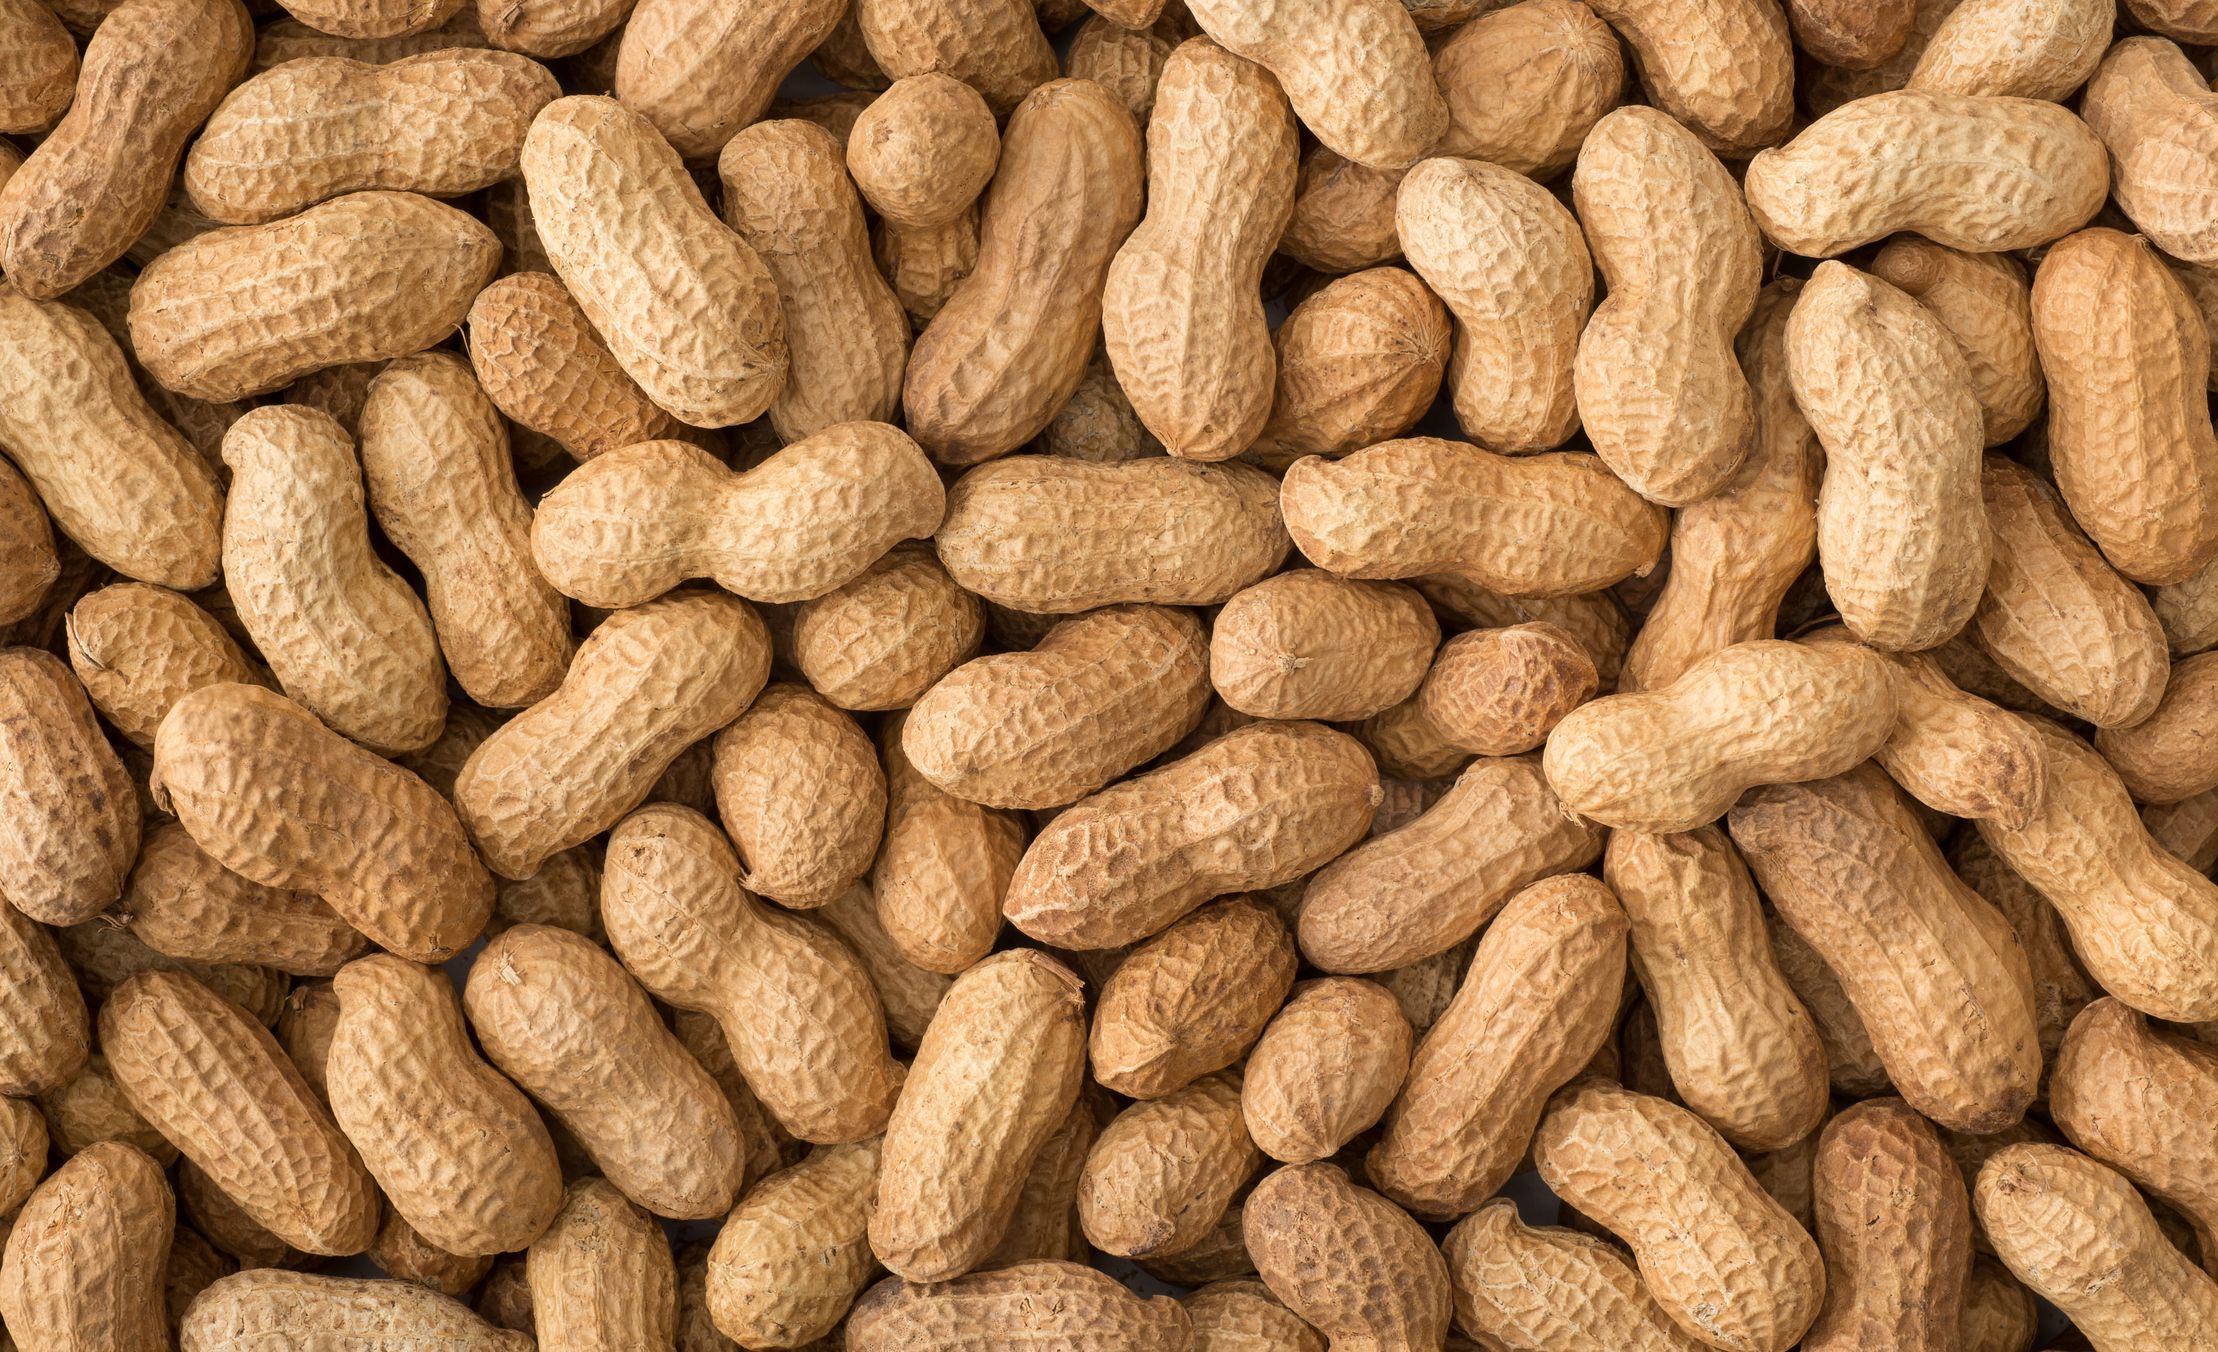 How to grow peanuts